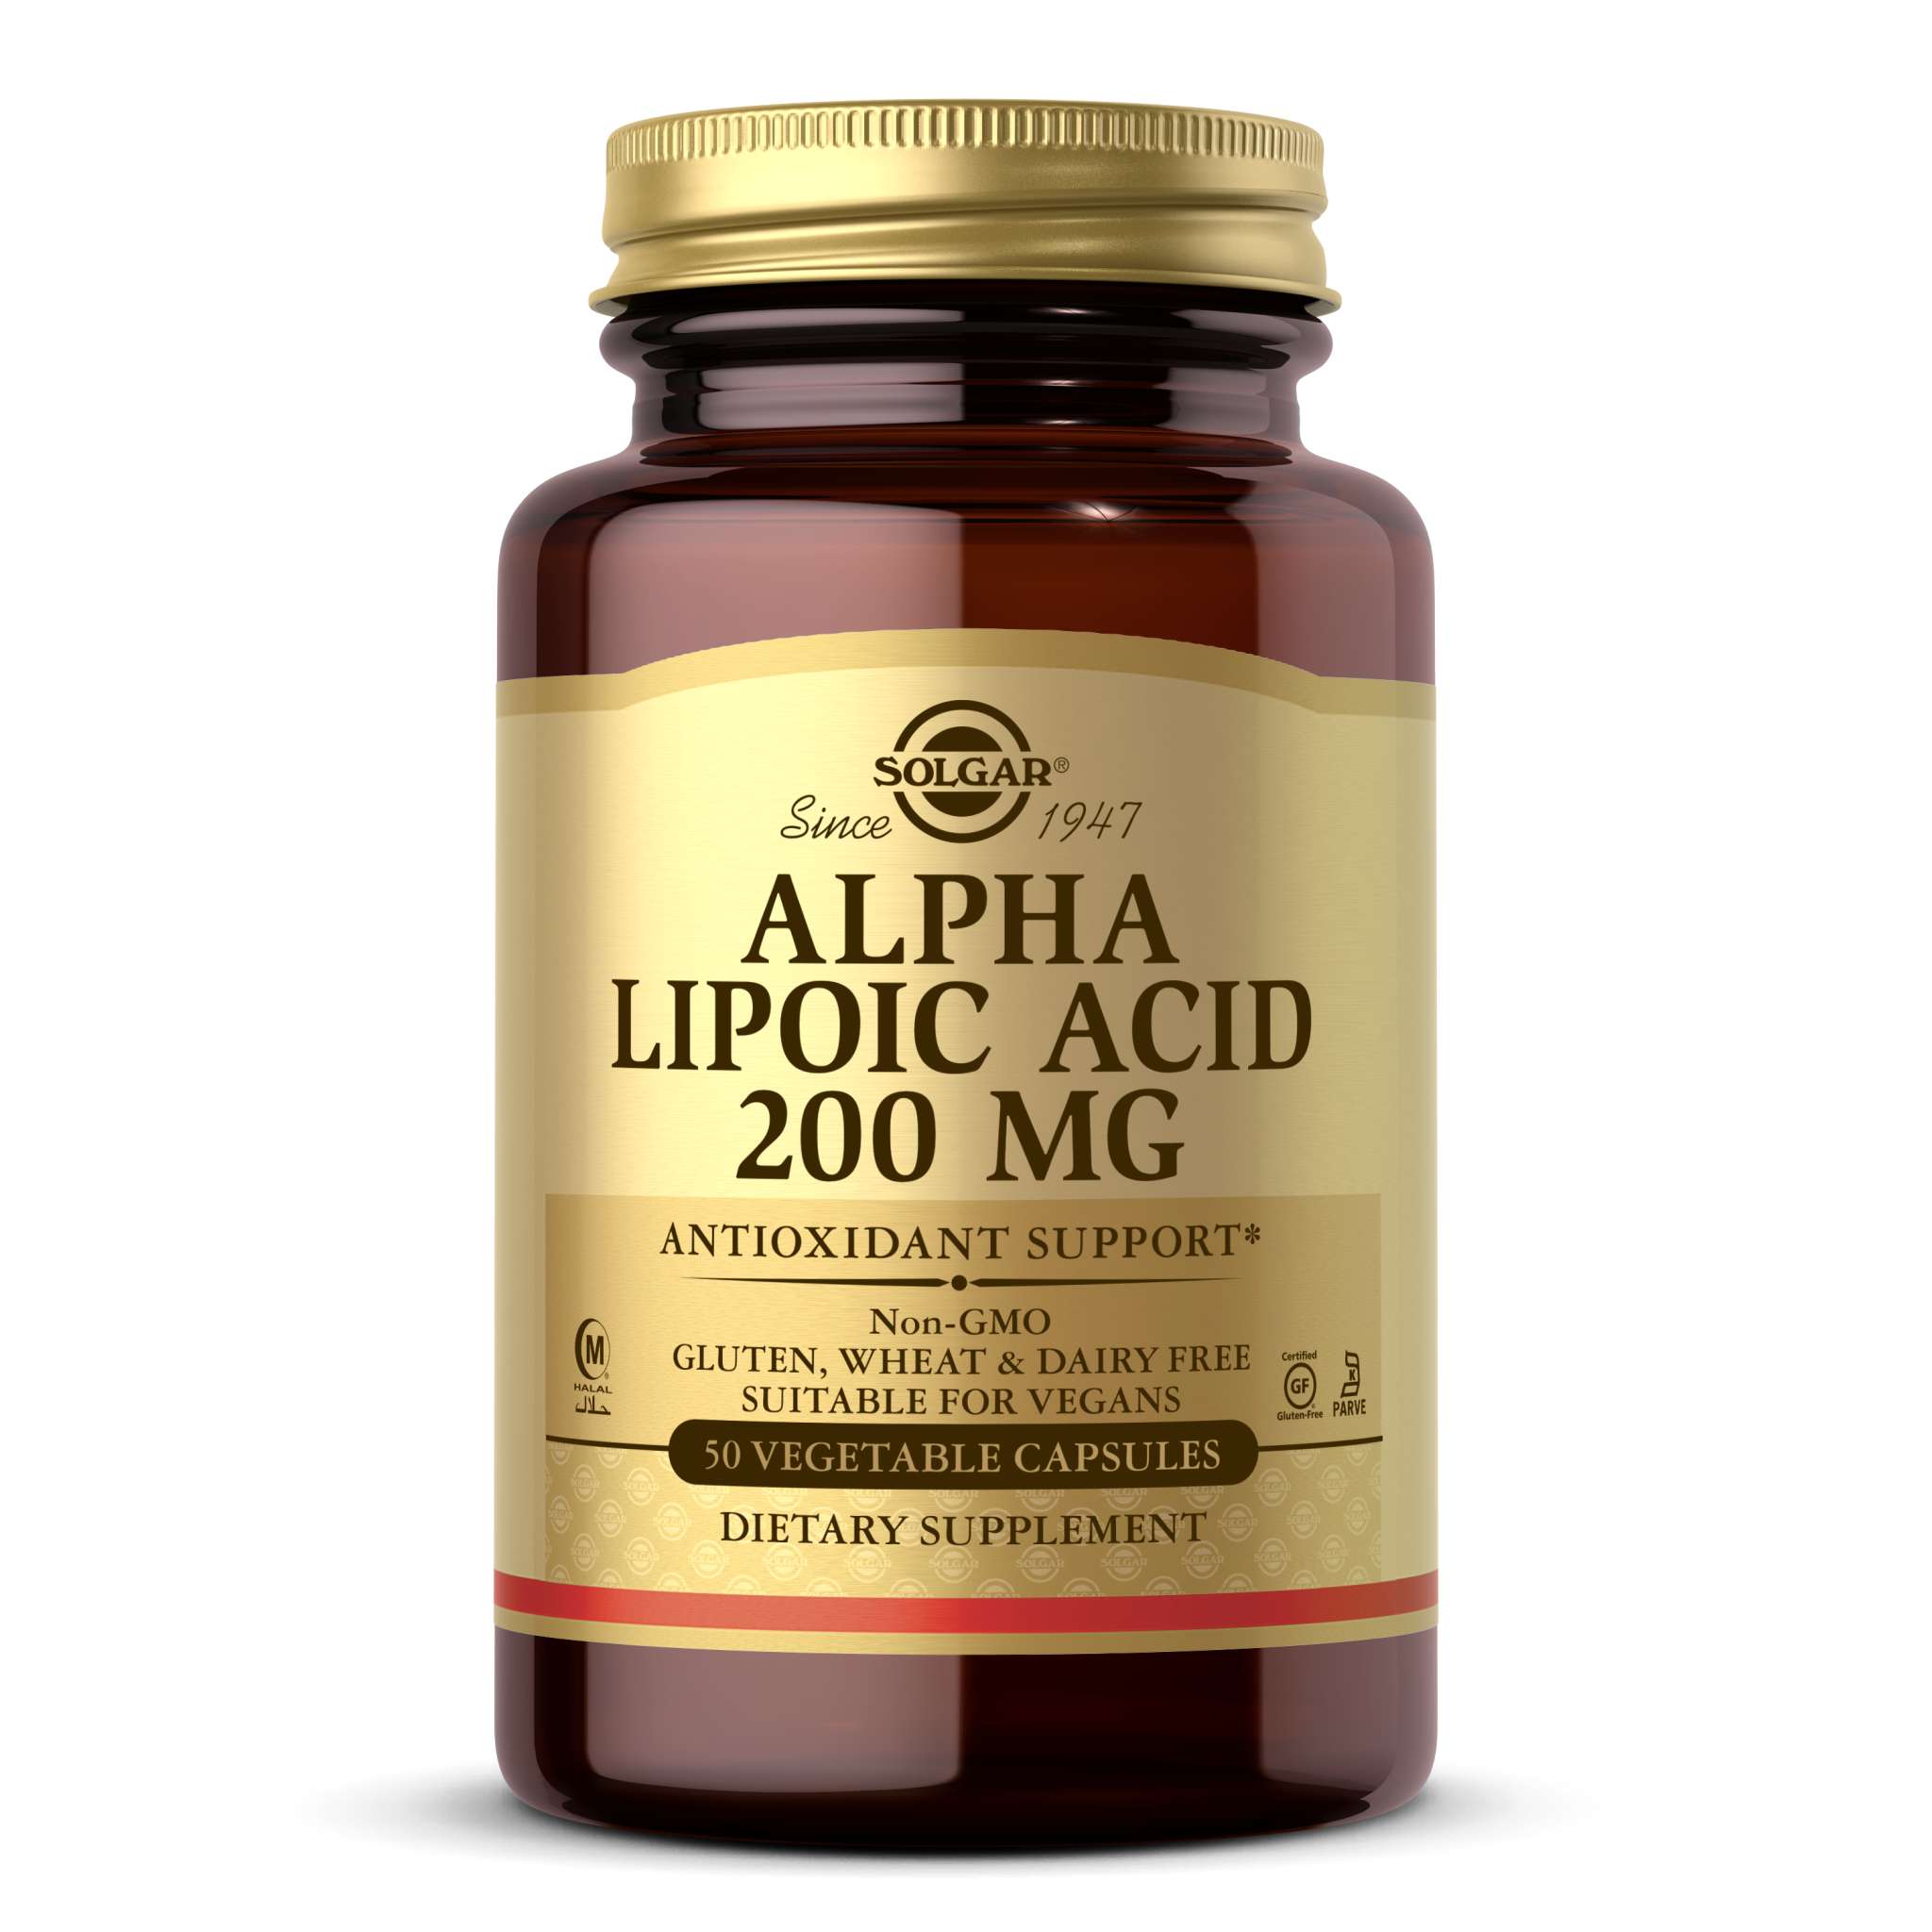 Solgar - Lipoic Acid 200 mg Alpha